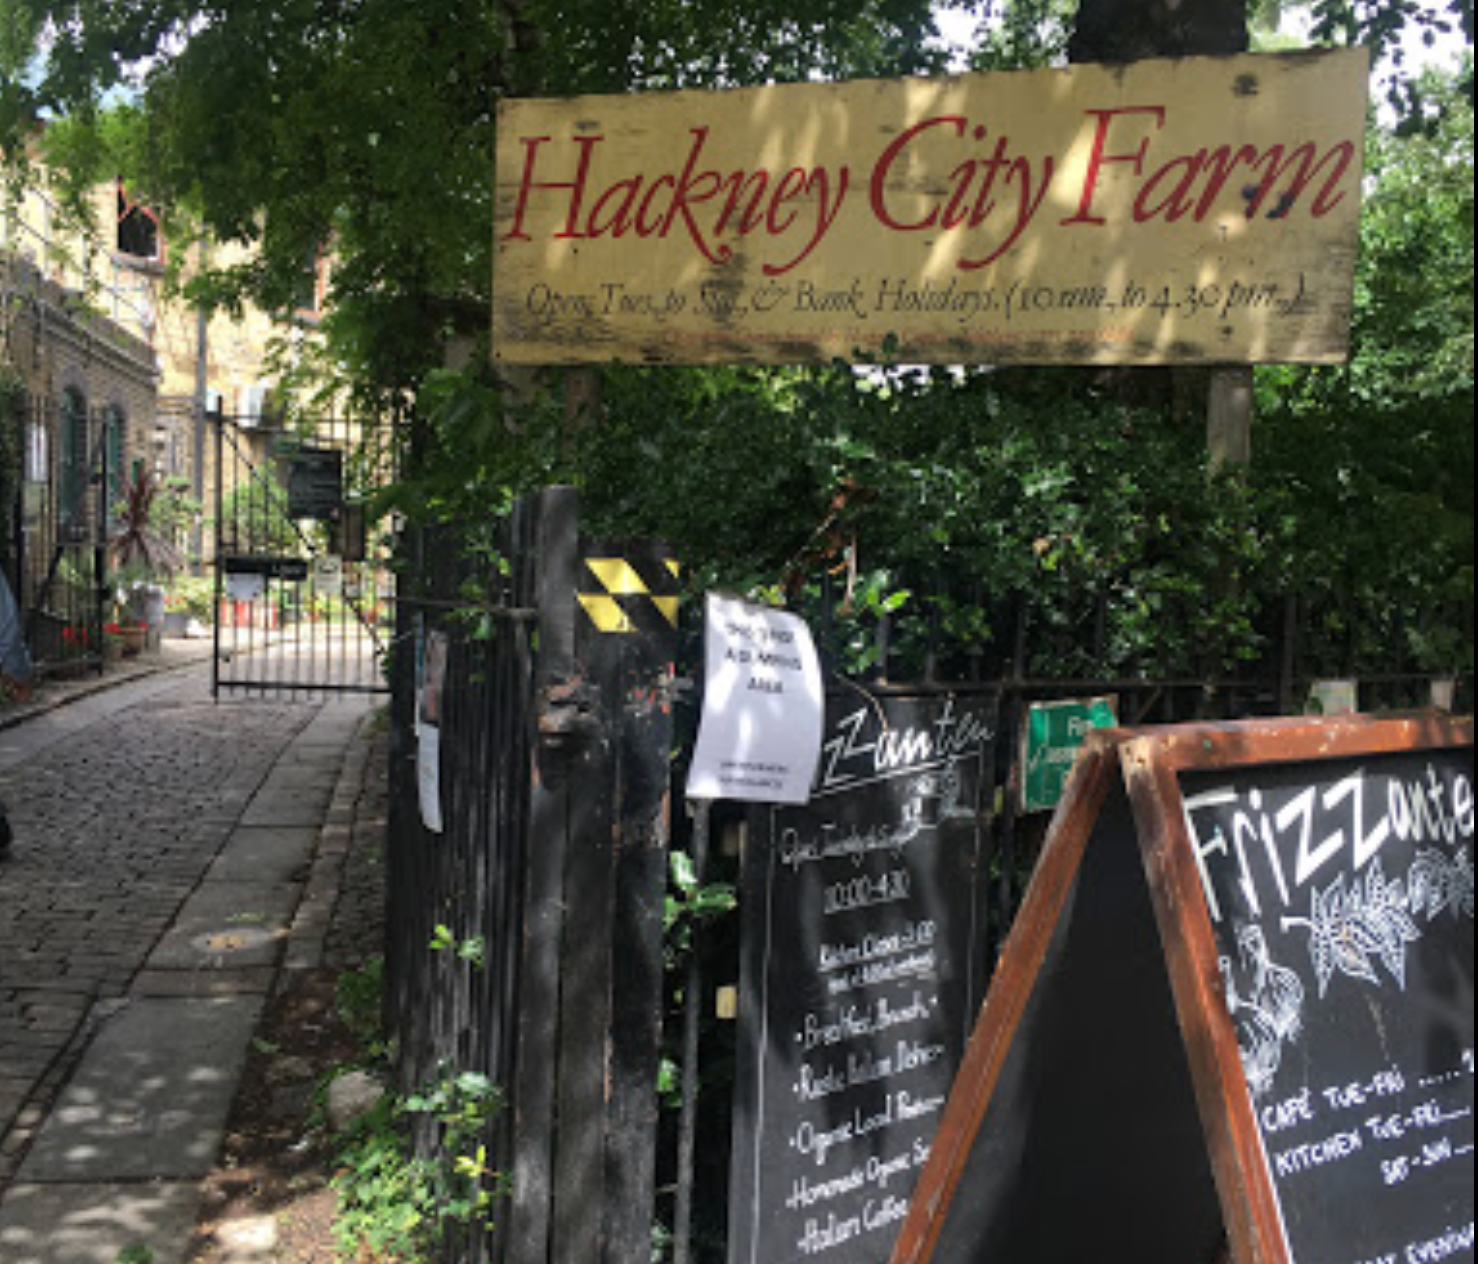 Hackney City Farm Yard